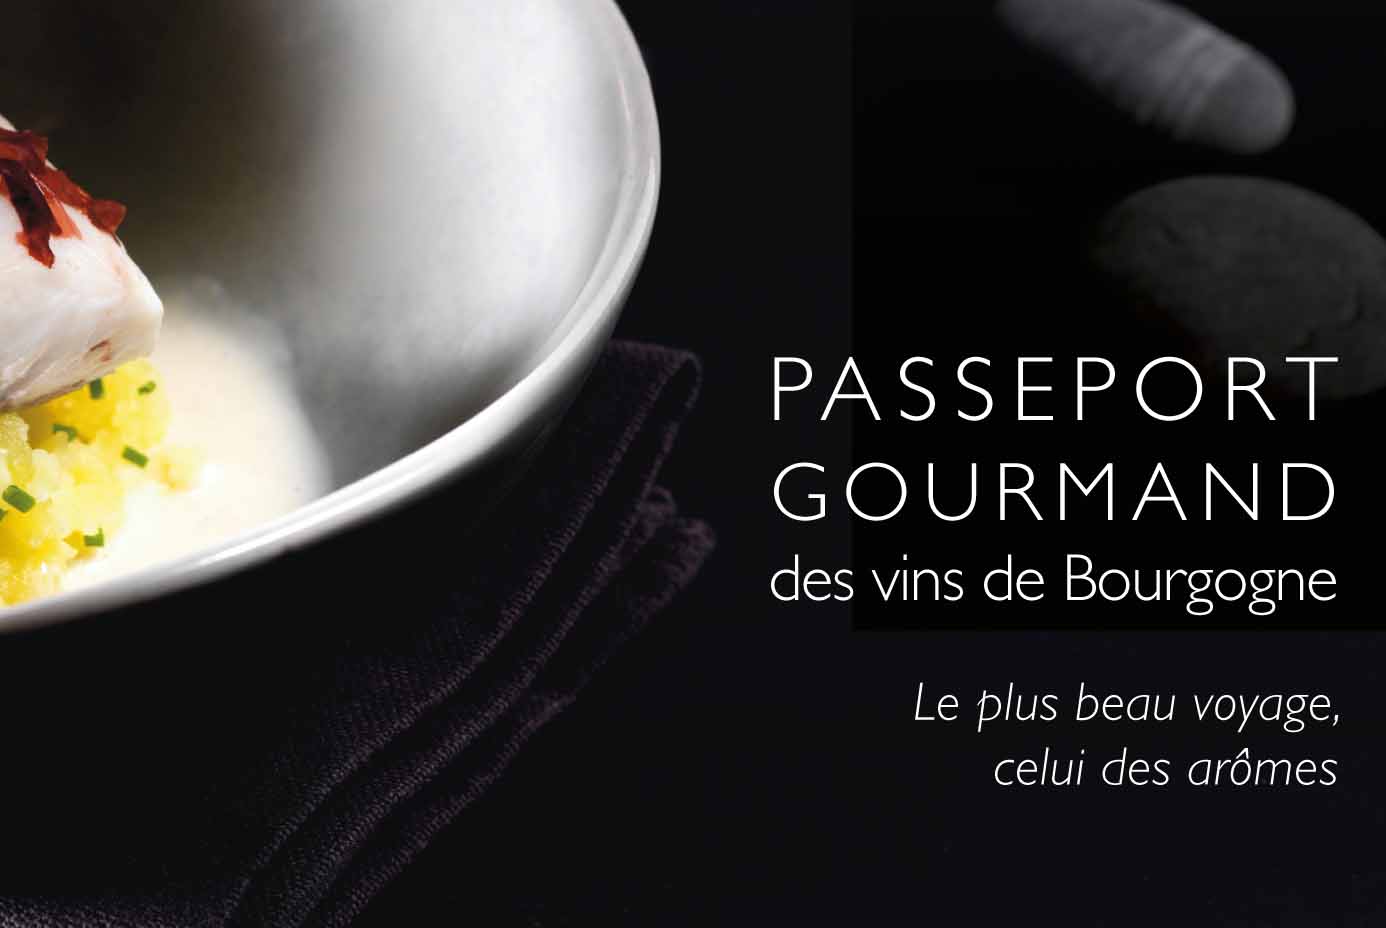 Passeport gourmand des vins de Bourgogne